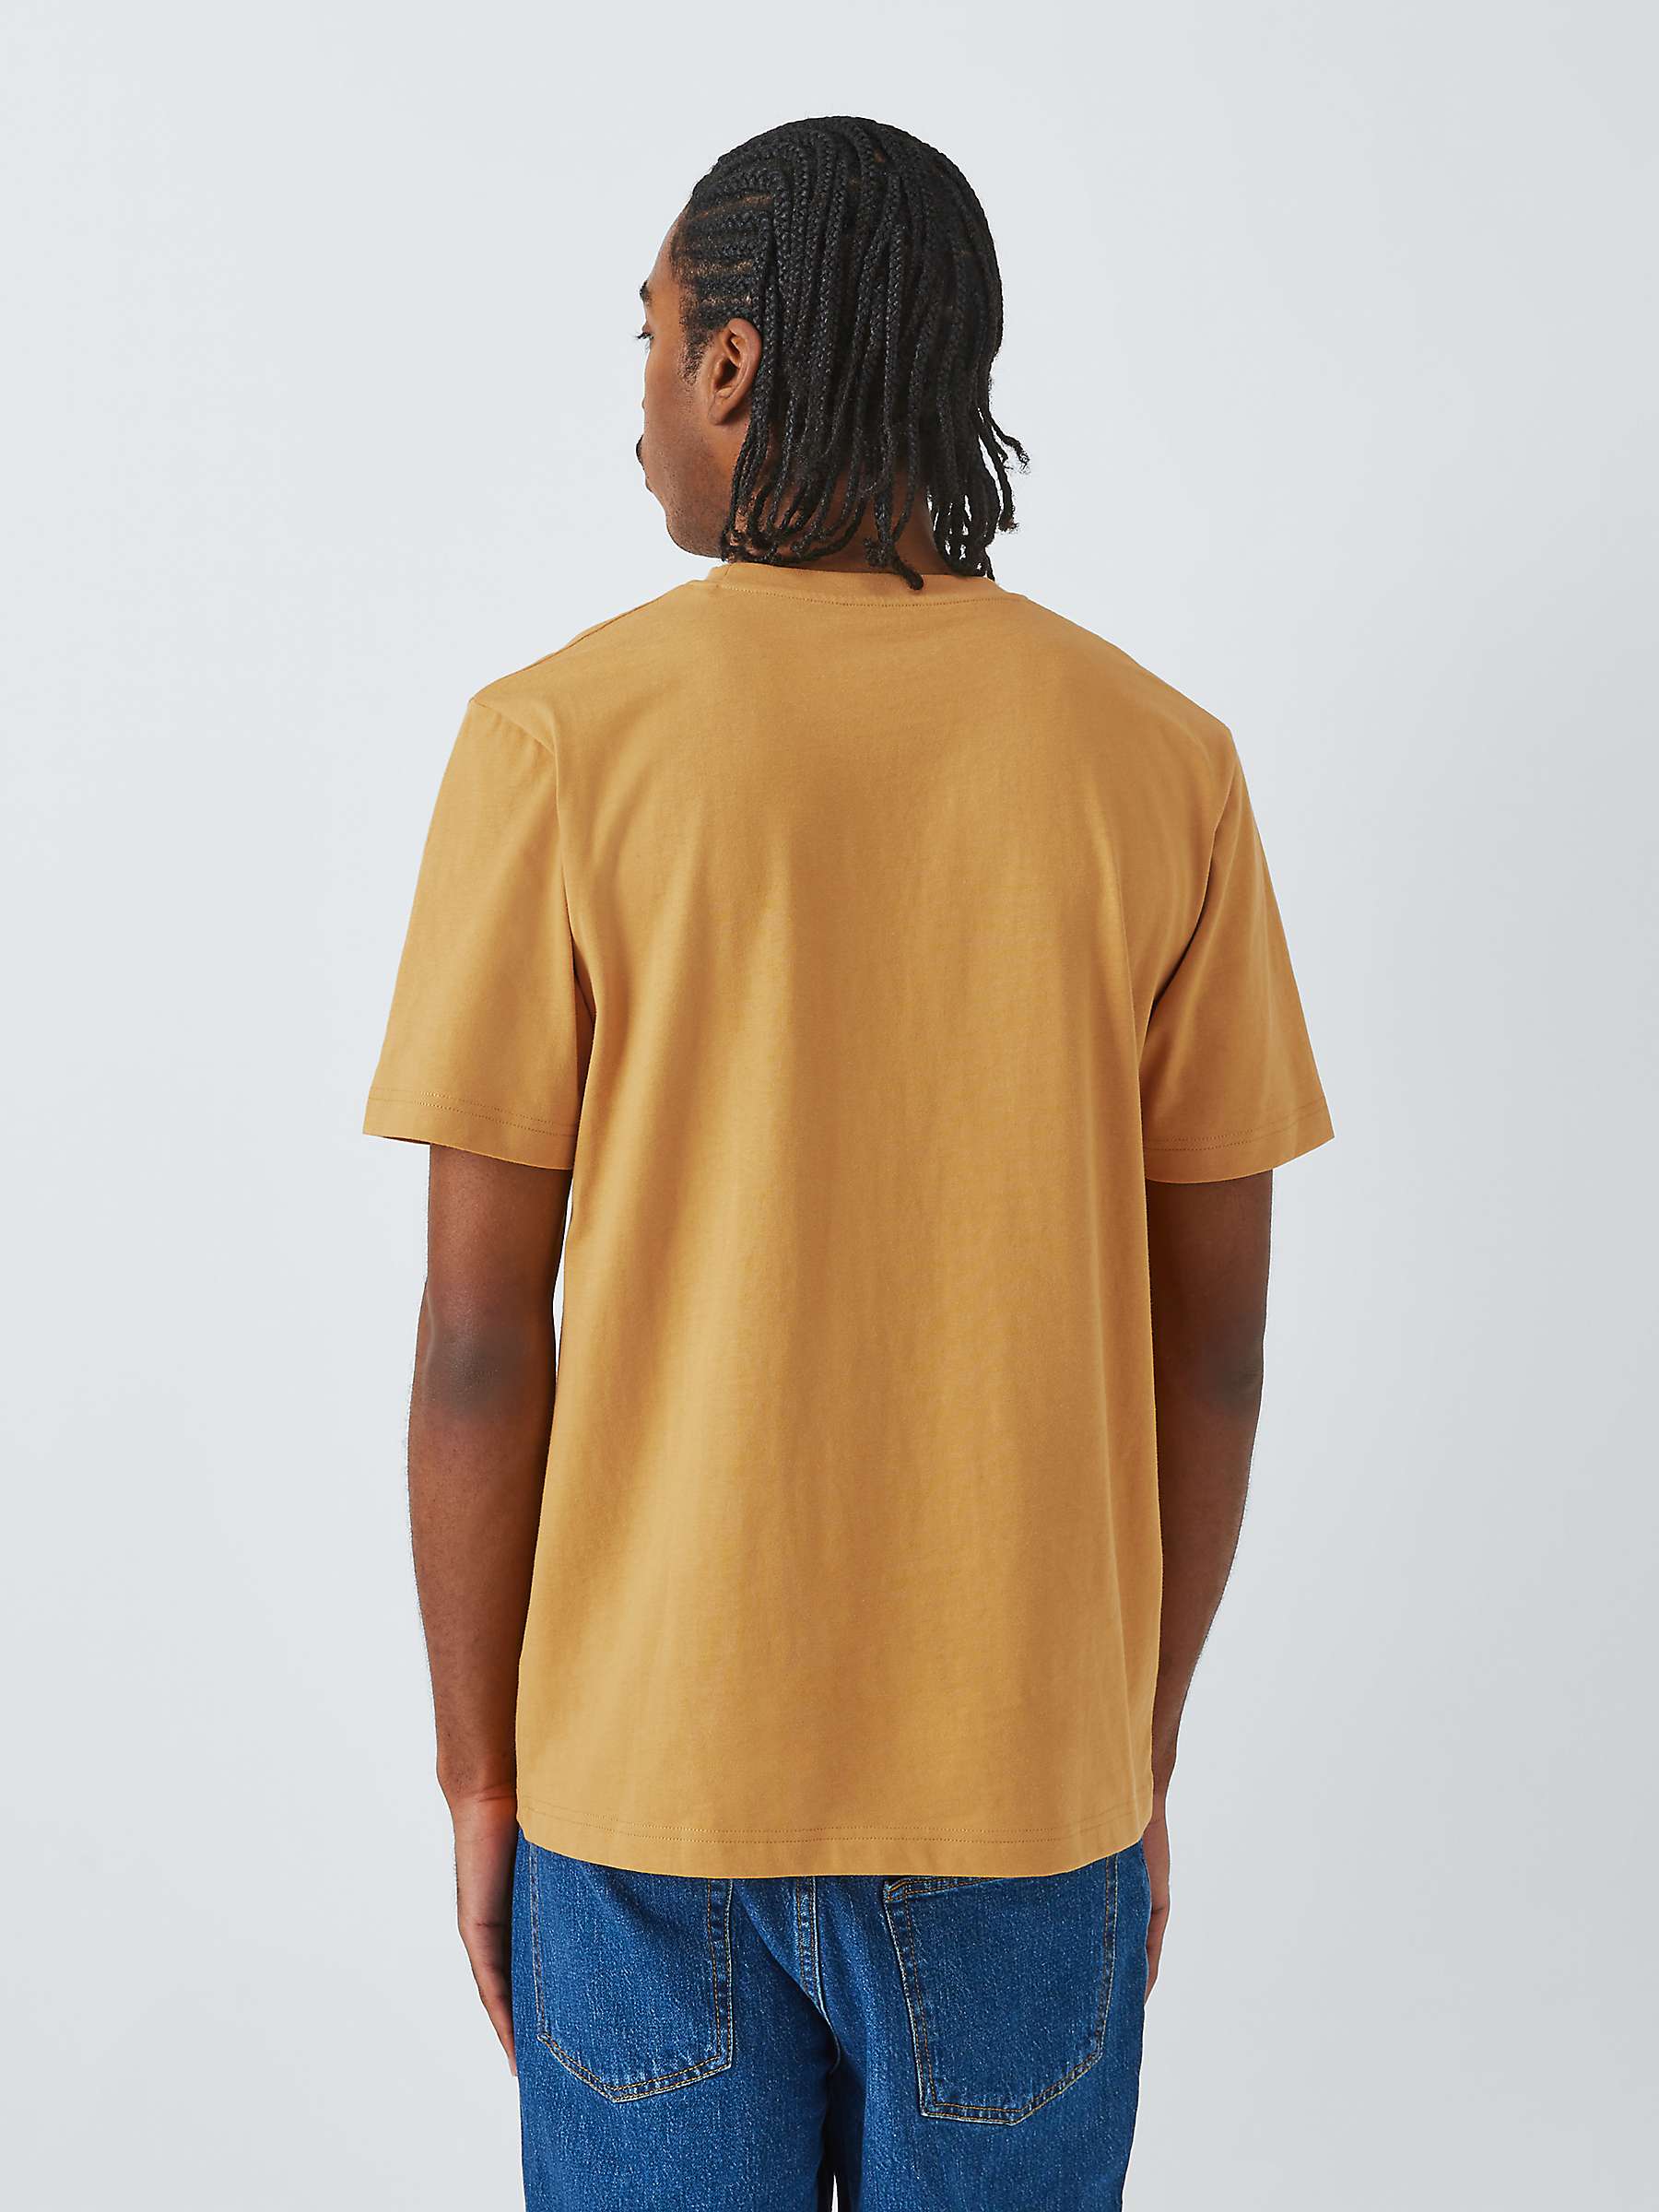 Buy John Lewis ANYDAY Short Sleeve Plain T-Shirt Online at johnlewis.com